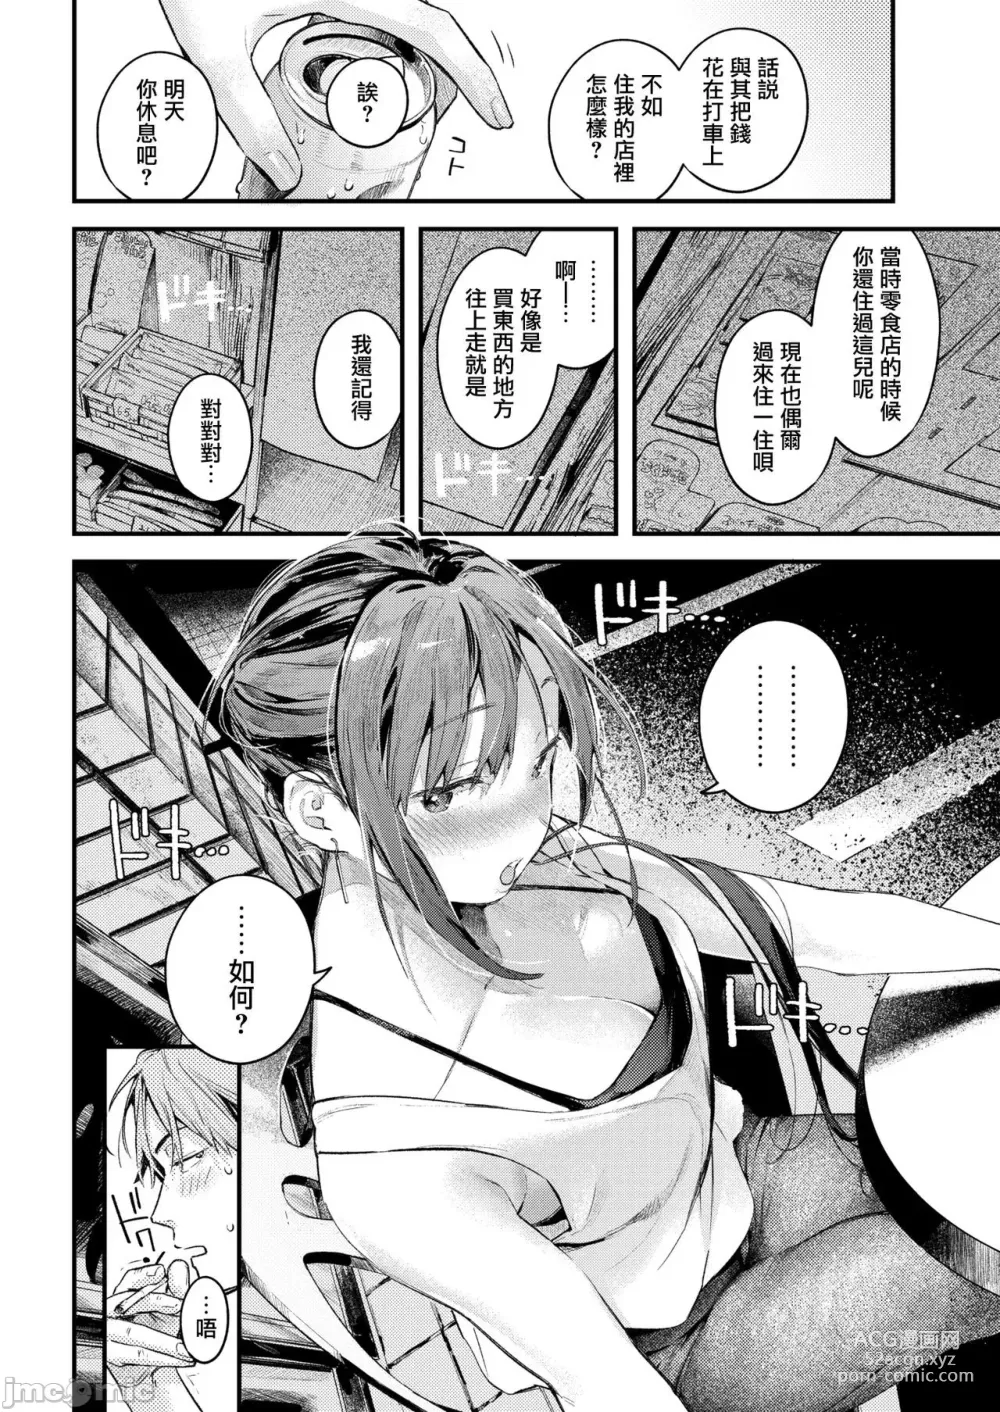 Page 8 of manga 像過去一樣